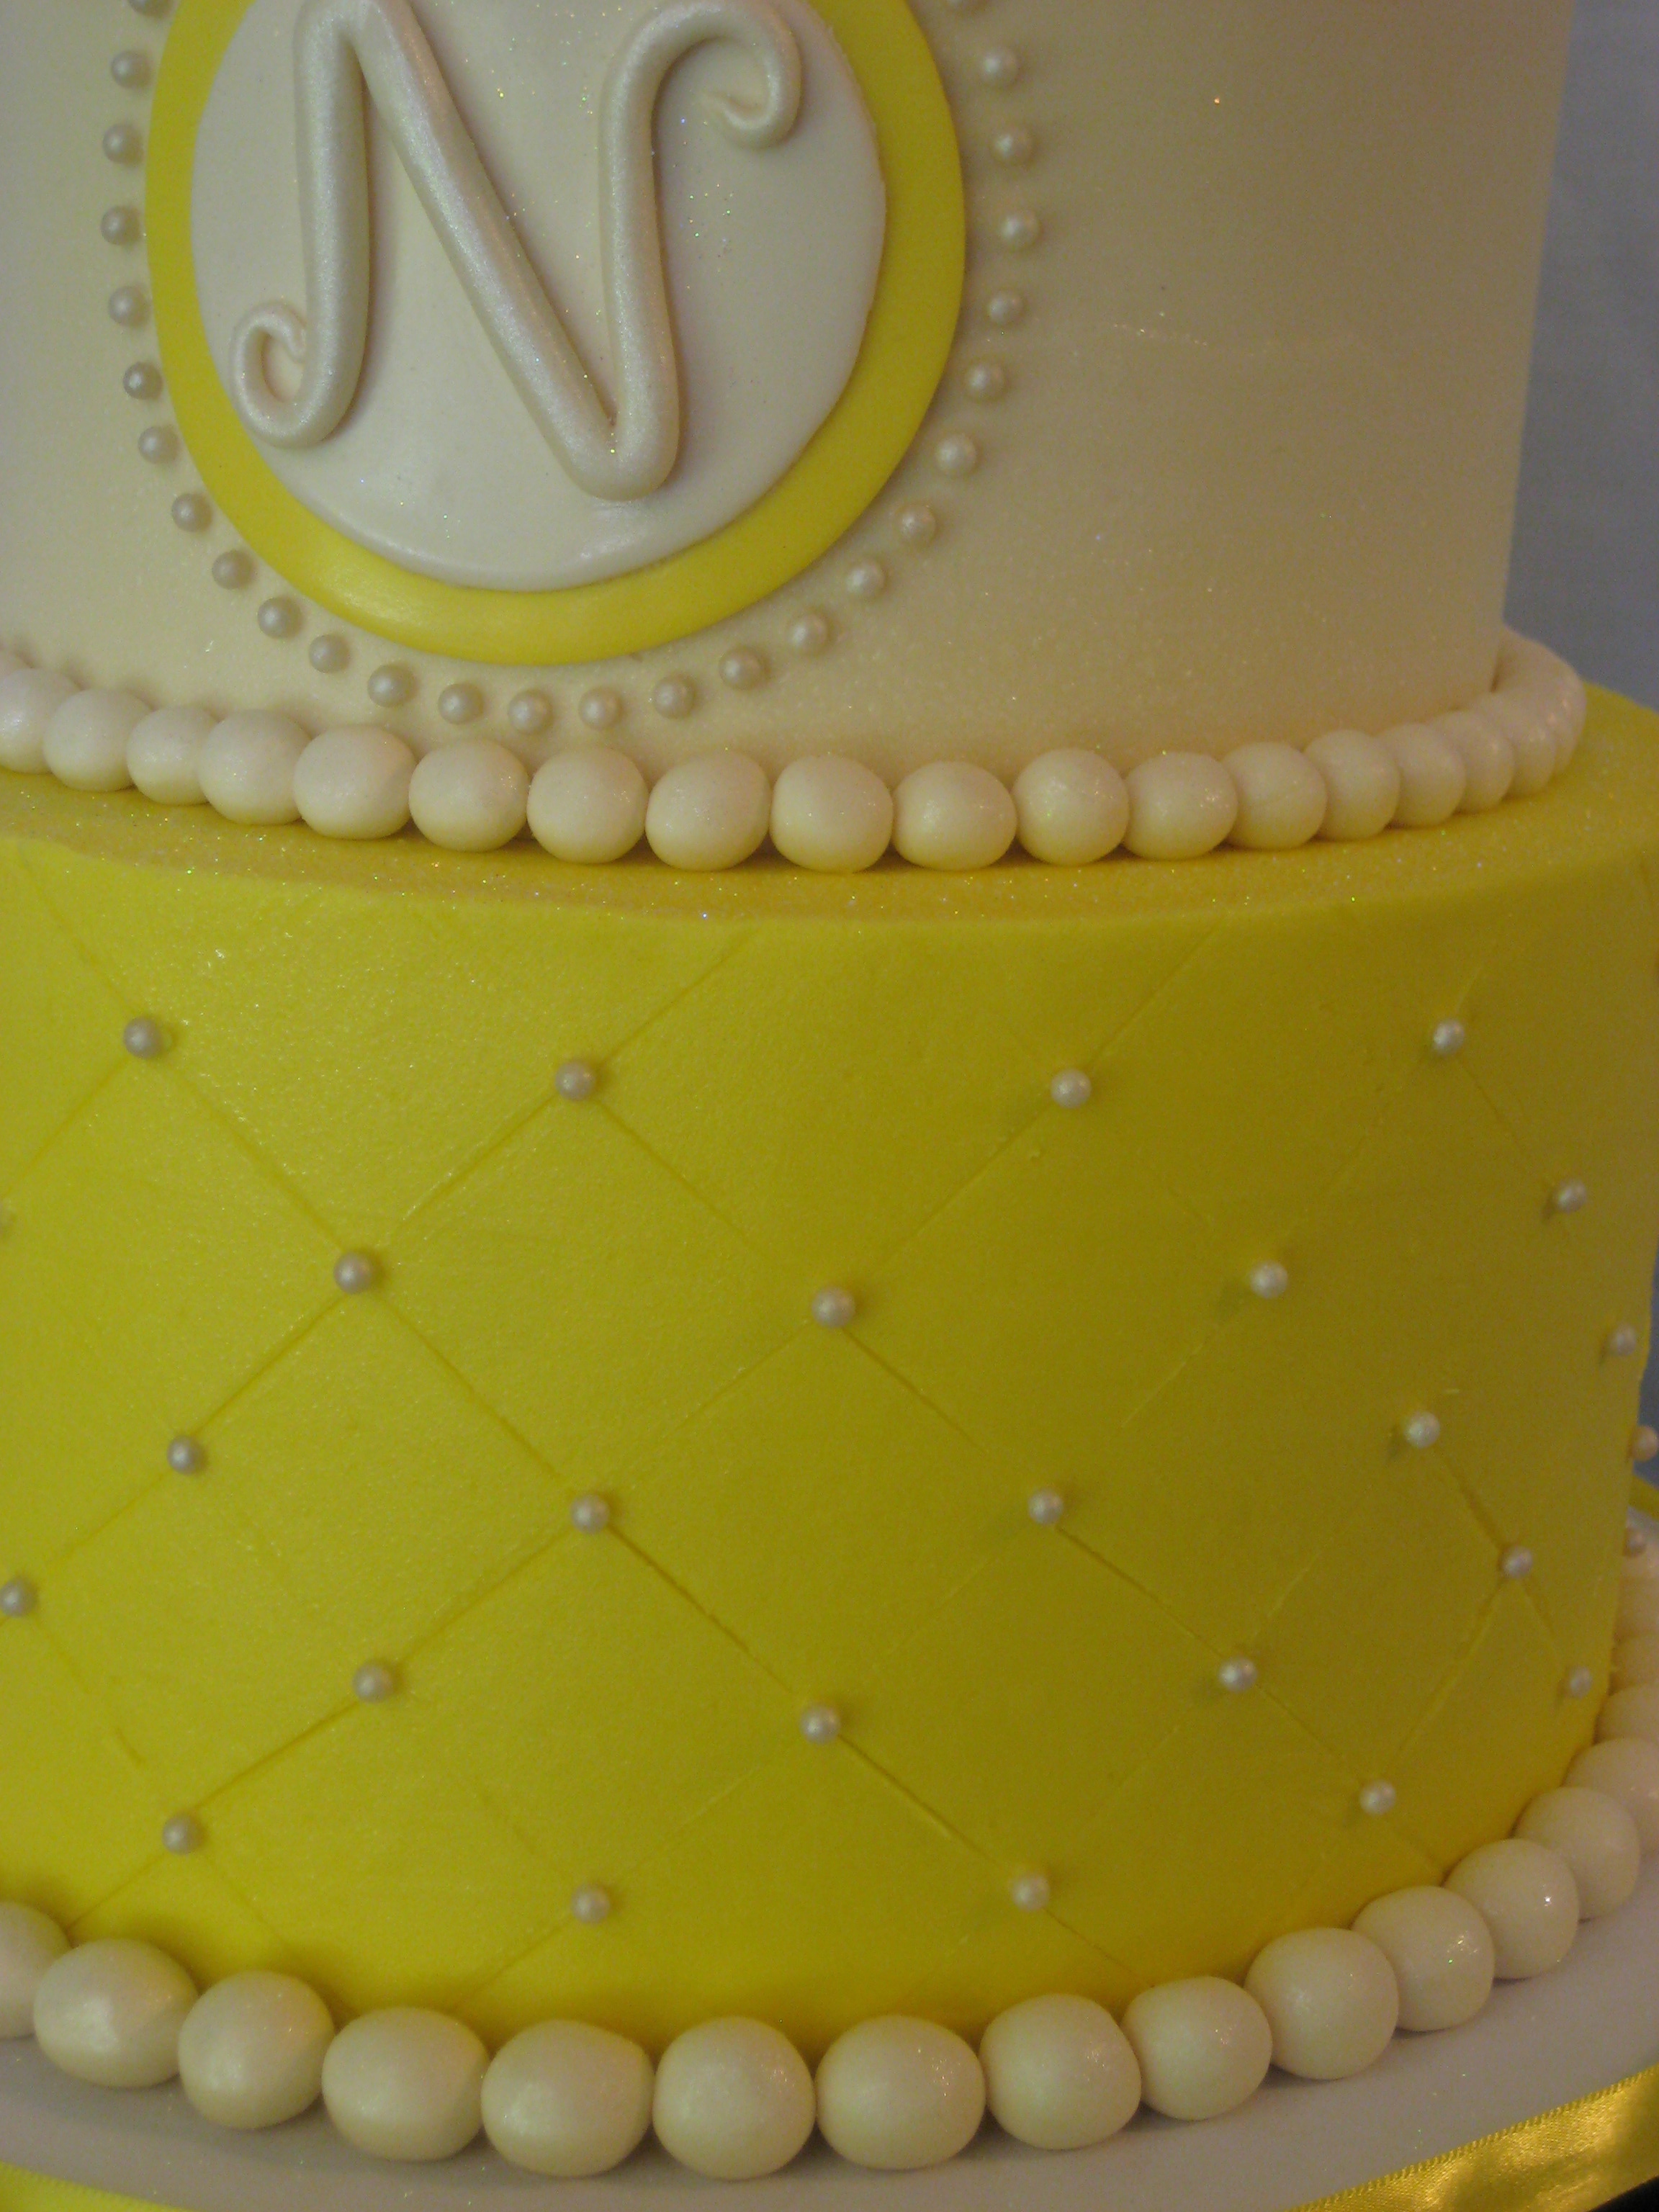 Diamond Pattern On Buttercream Cake